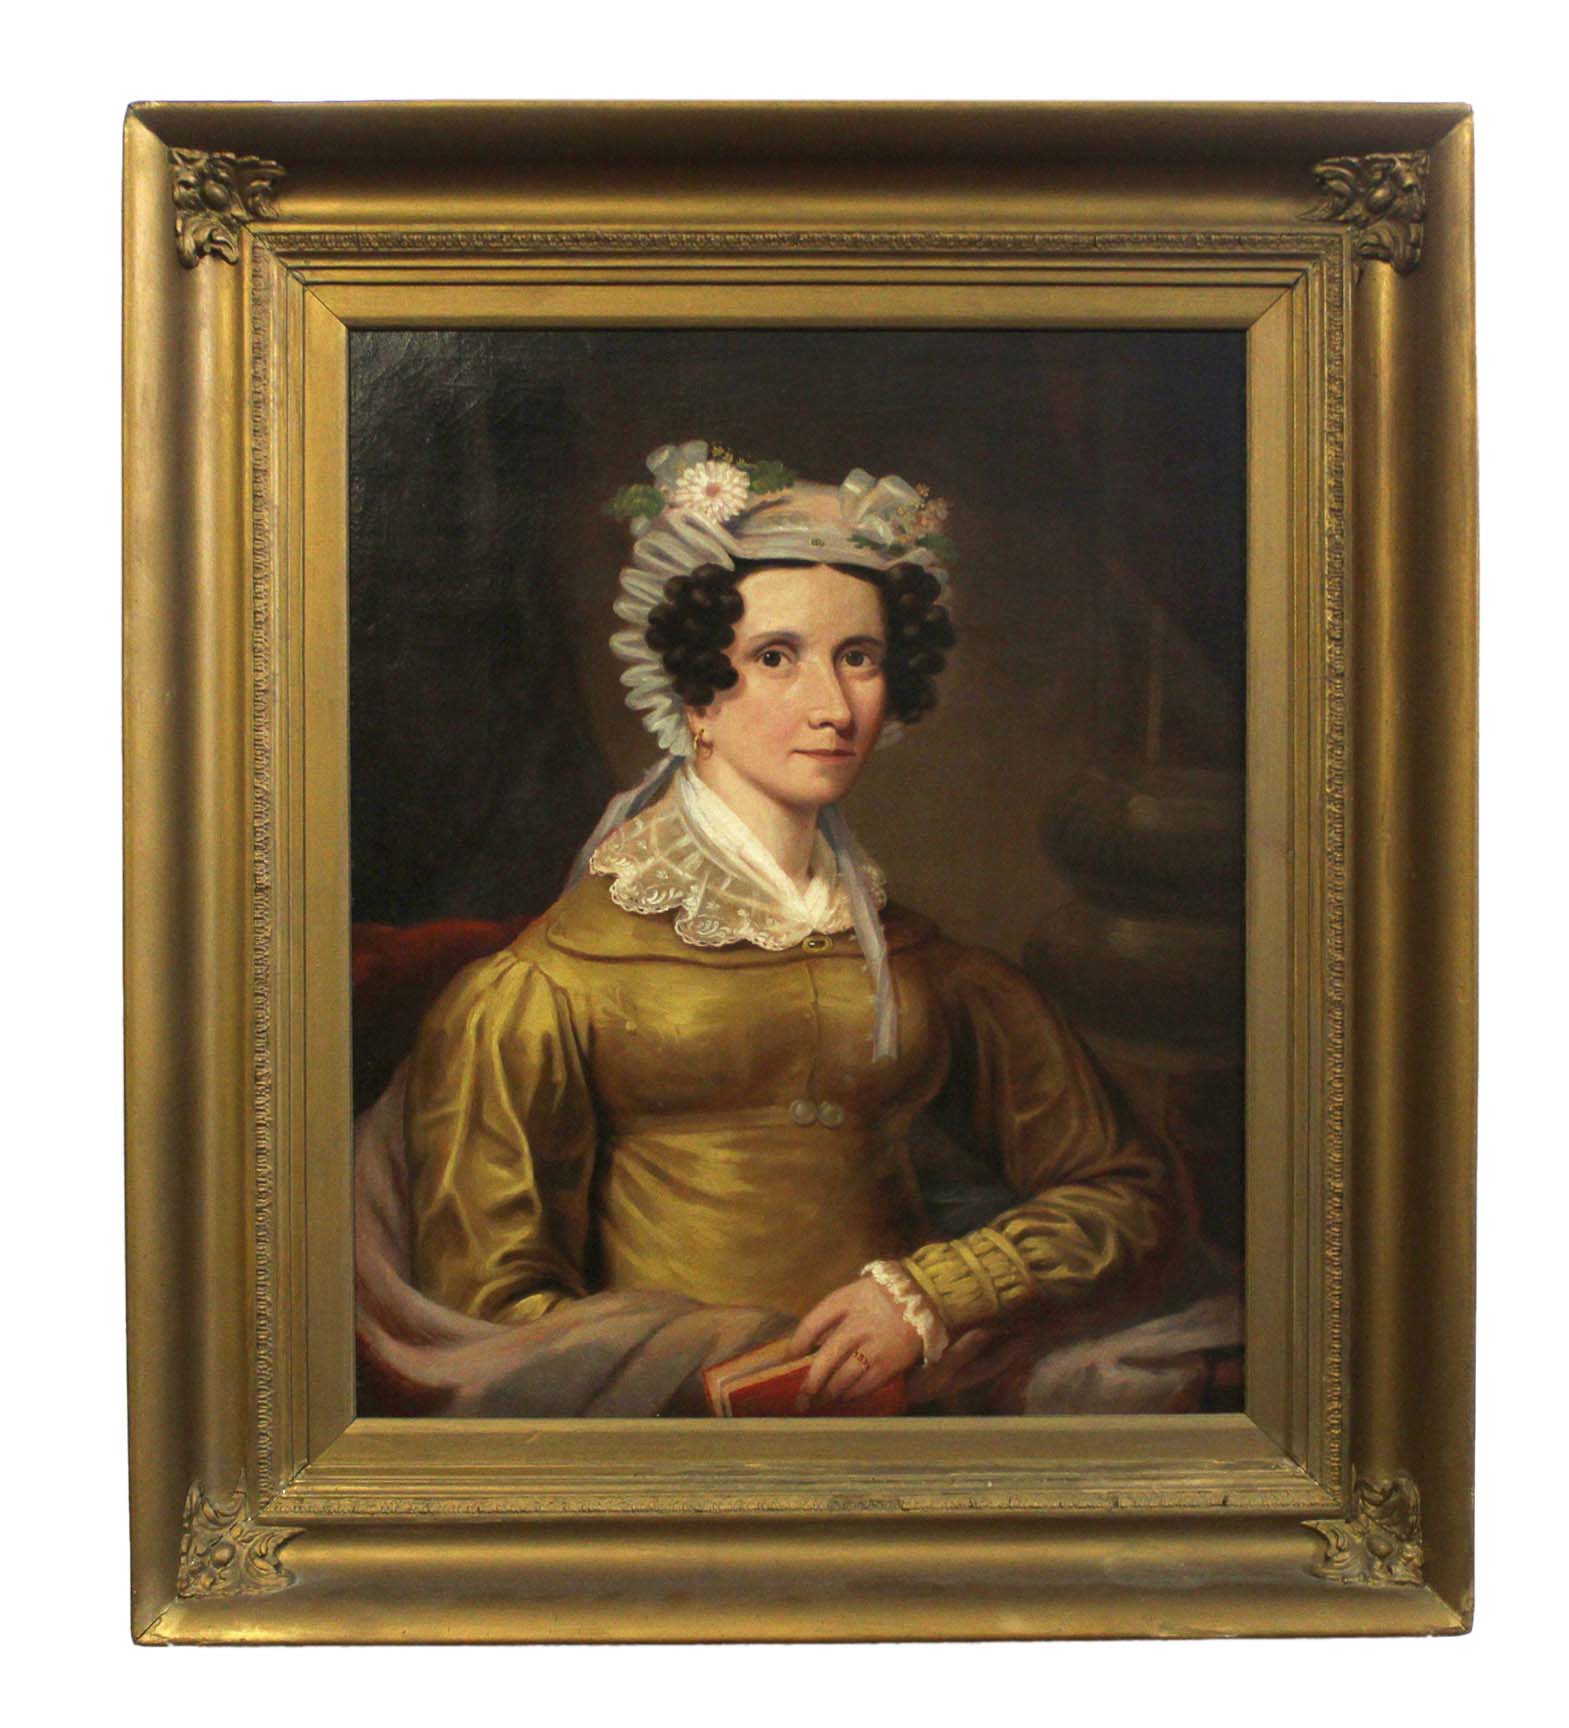 English School (19th century), Half-length portrait of a seated lady, oil on canvas, 70 x 56cm